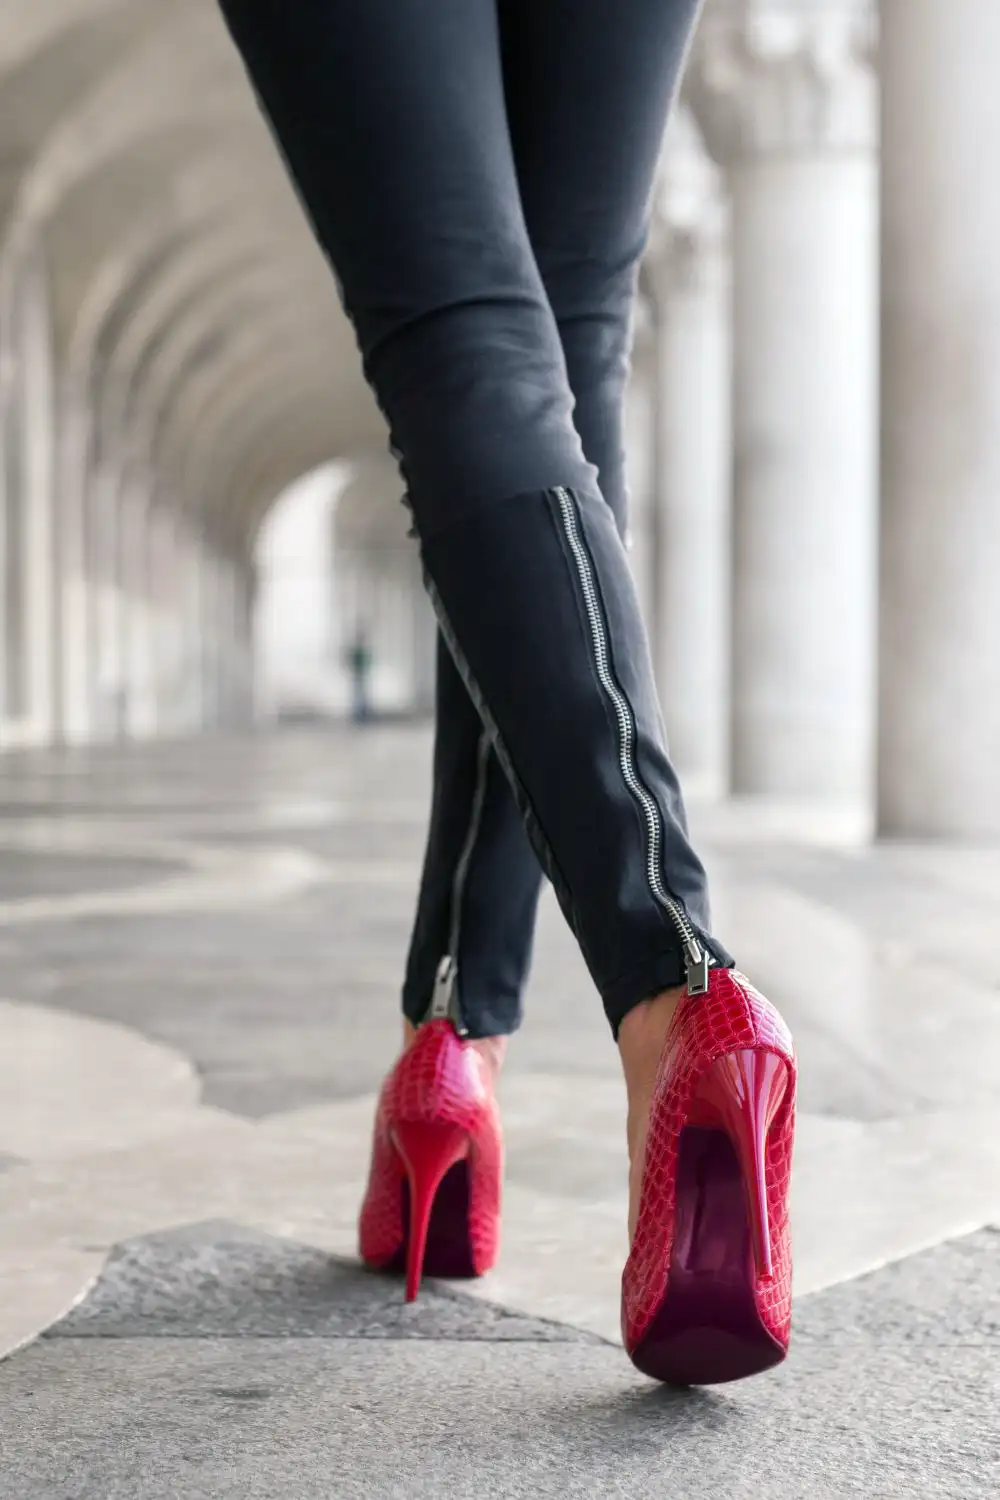 Woman Walking in Black Pants and Red High Heels